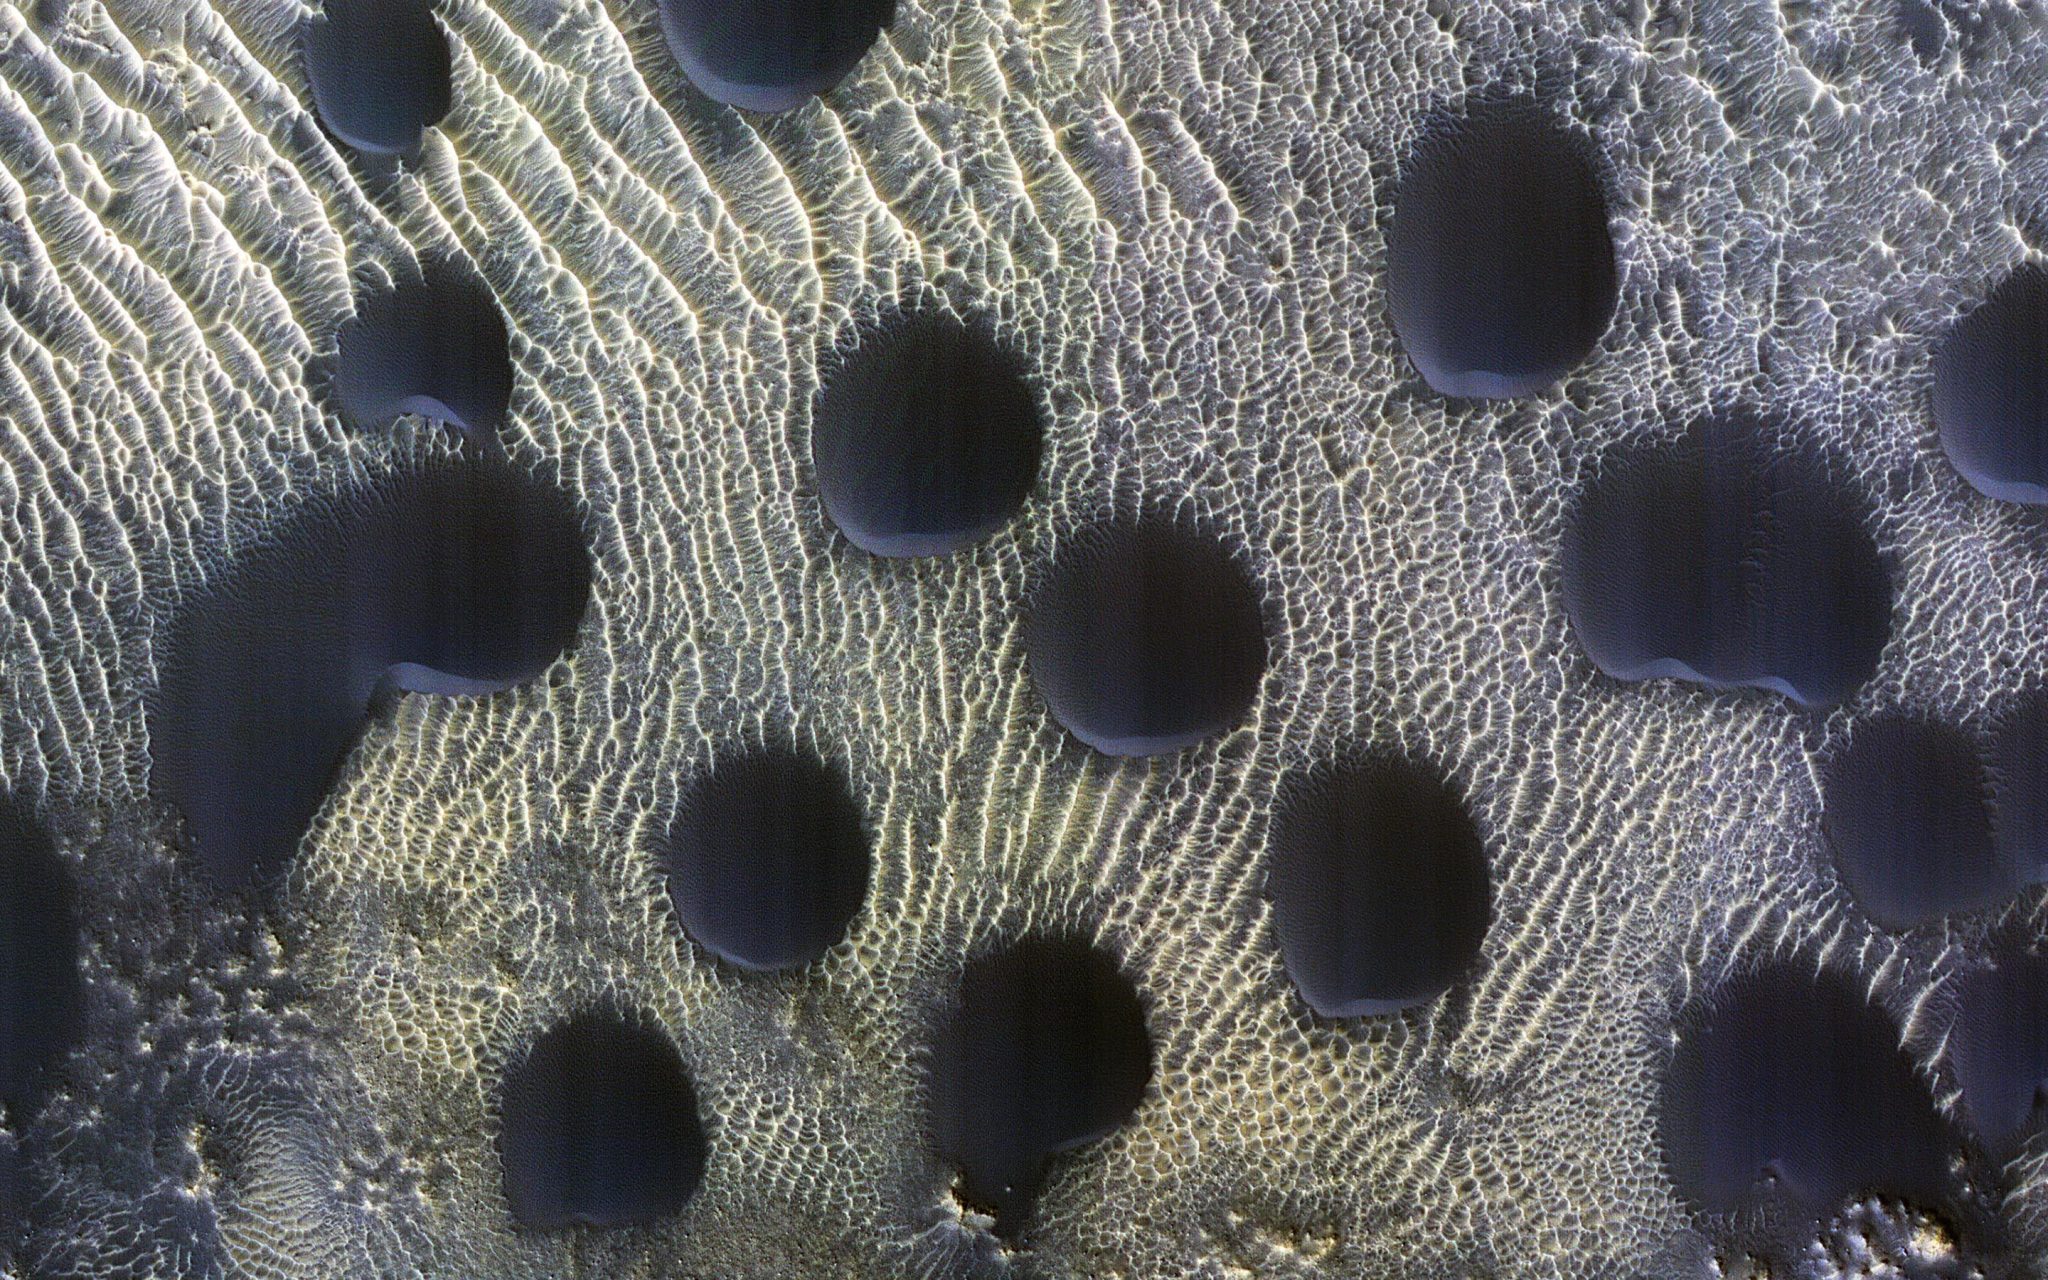 Extrañas dunas de arena circulares descubiertas en Marte por nave espacial de la NASA